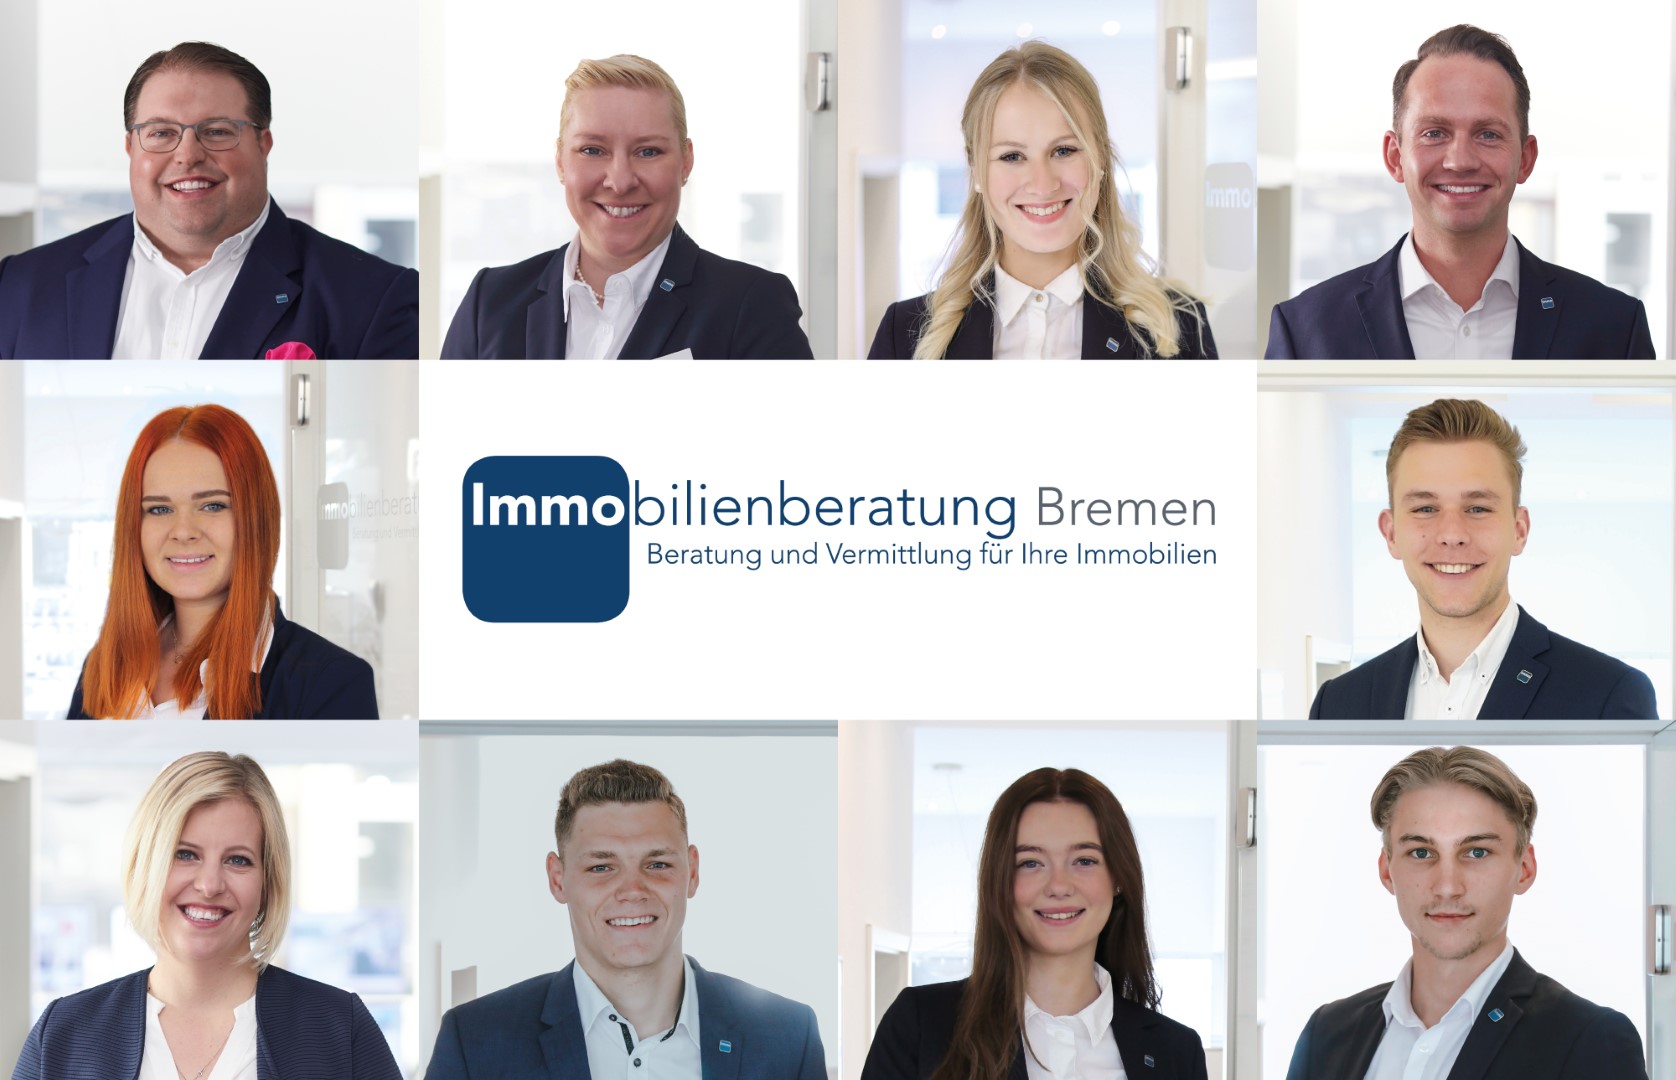 Team Immobilienberatung Bremen